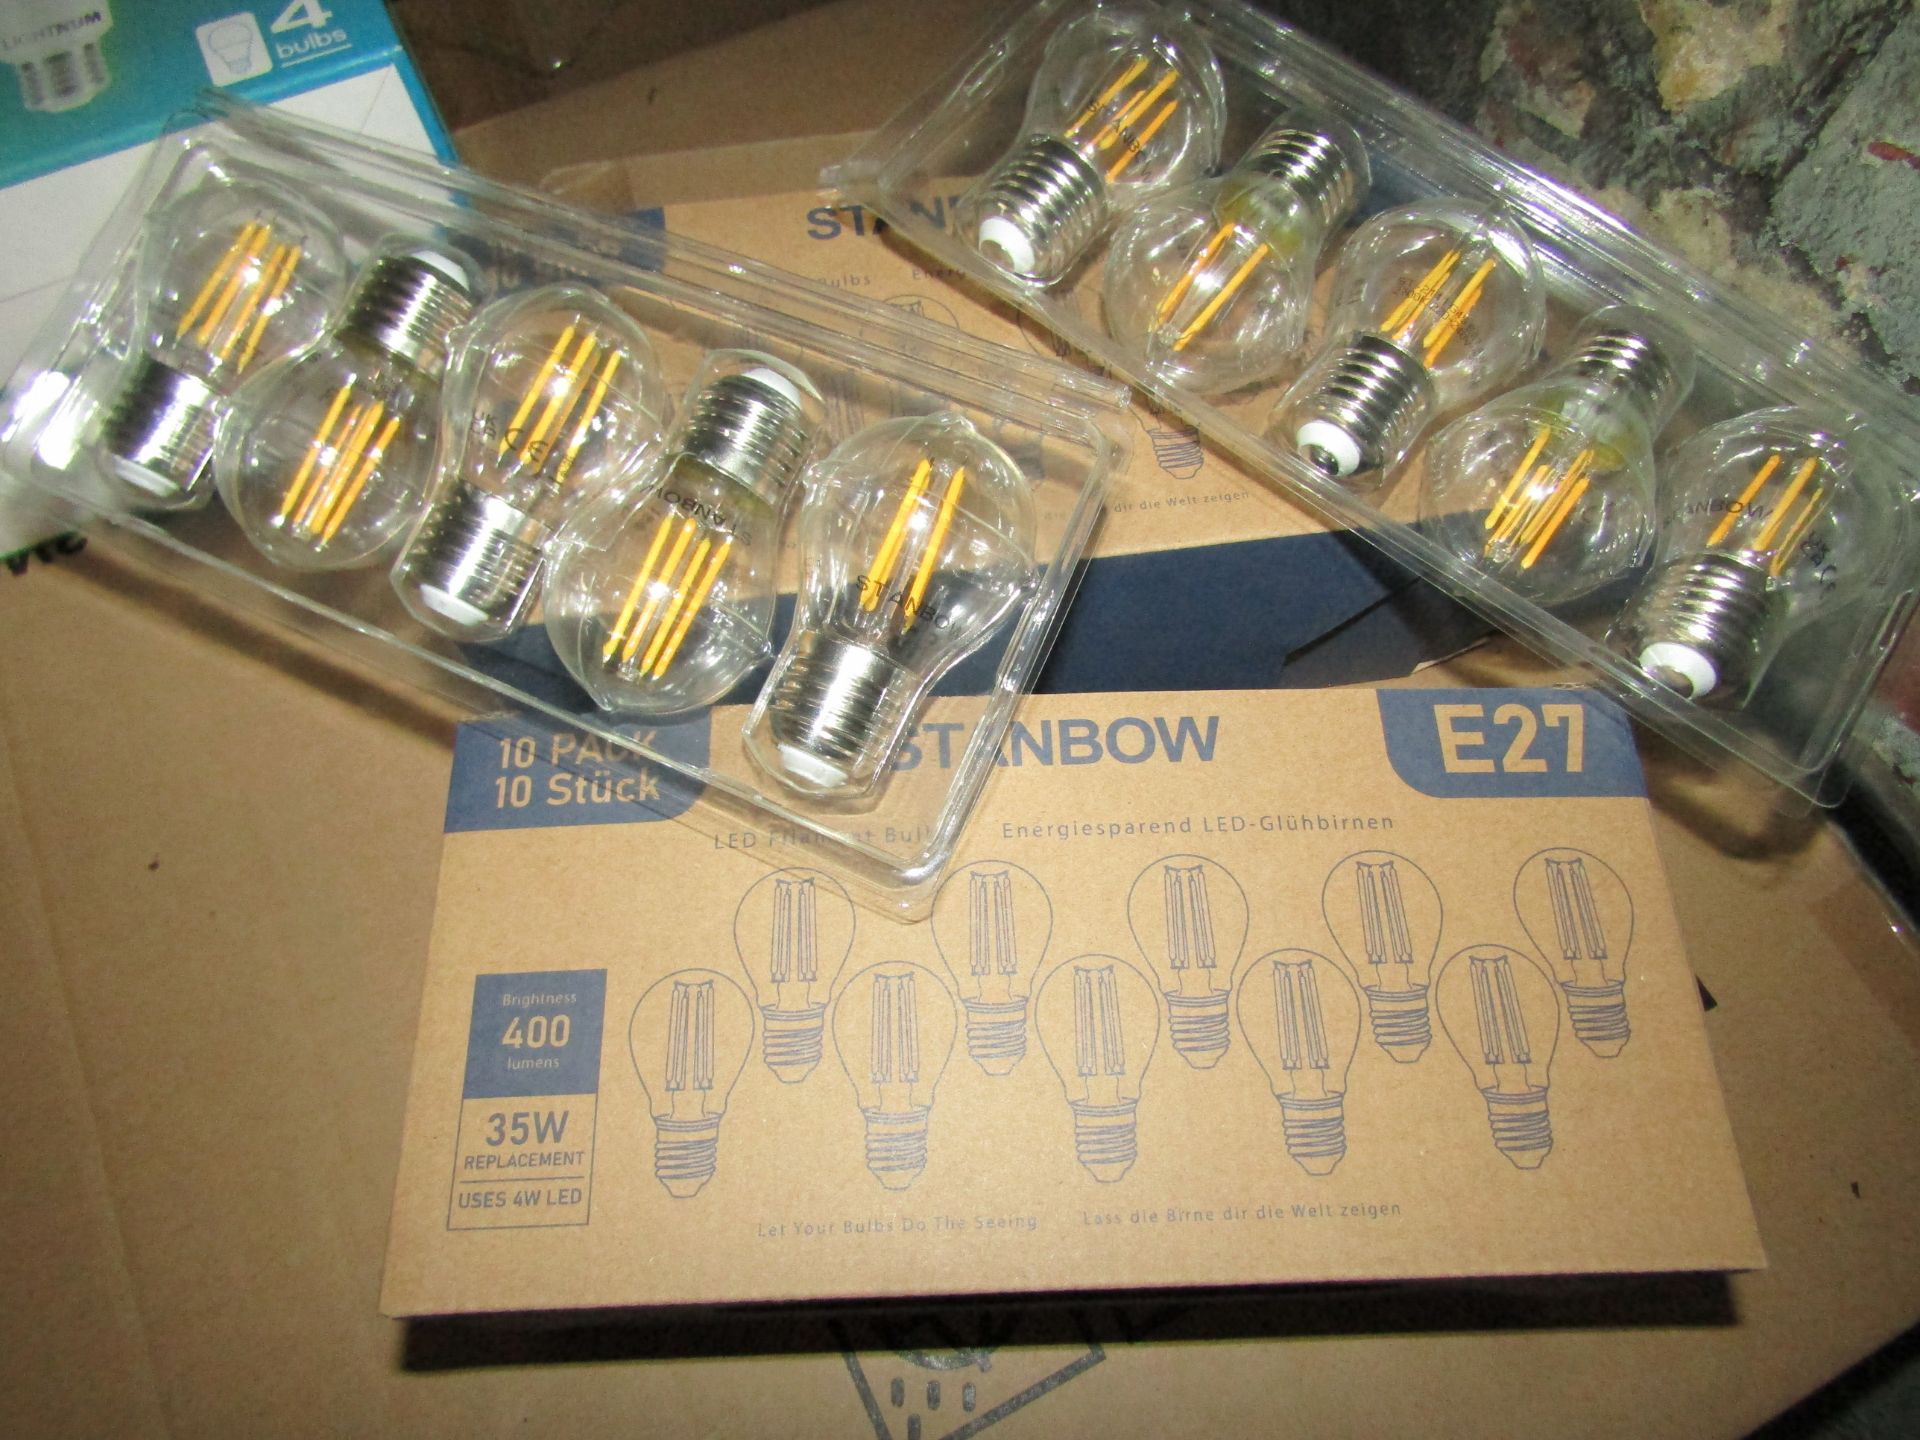 2X STANBOW - E27 400 Lumen LED Filament Light Bulbs - Pack of 10 - New & Boxed.